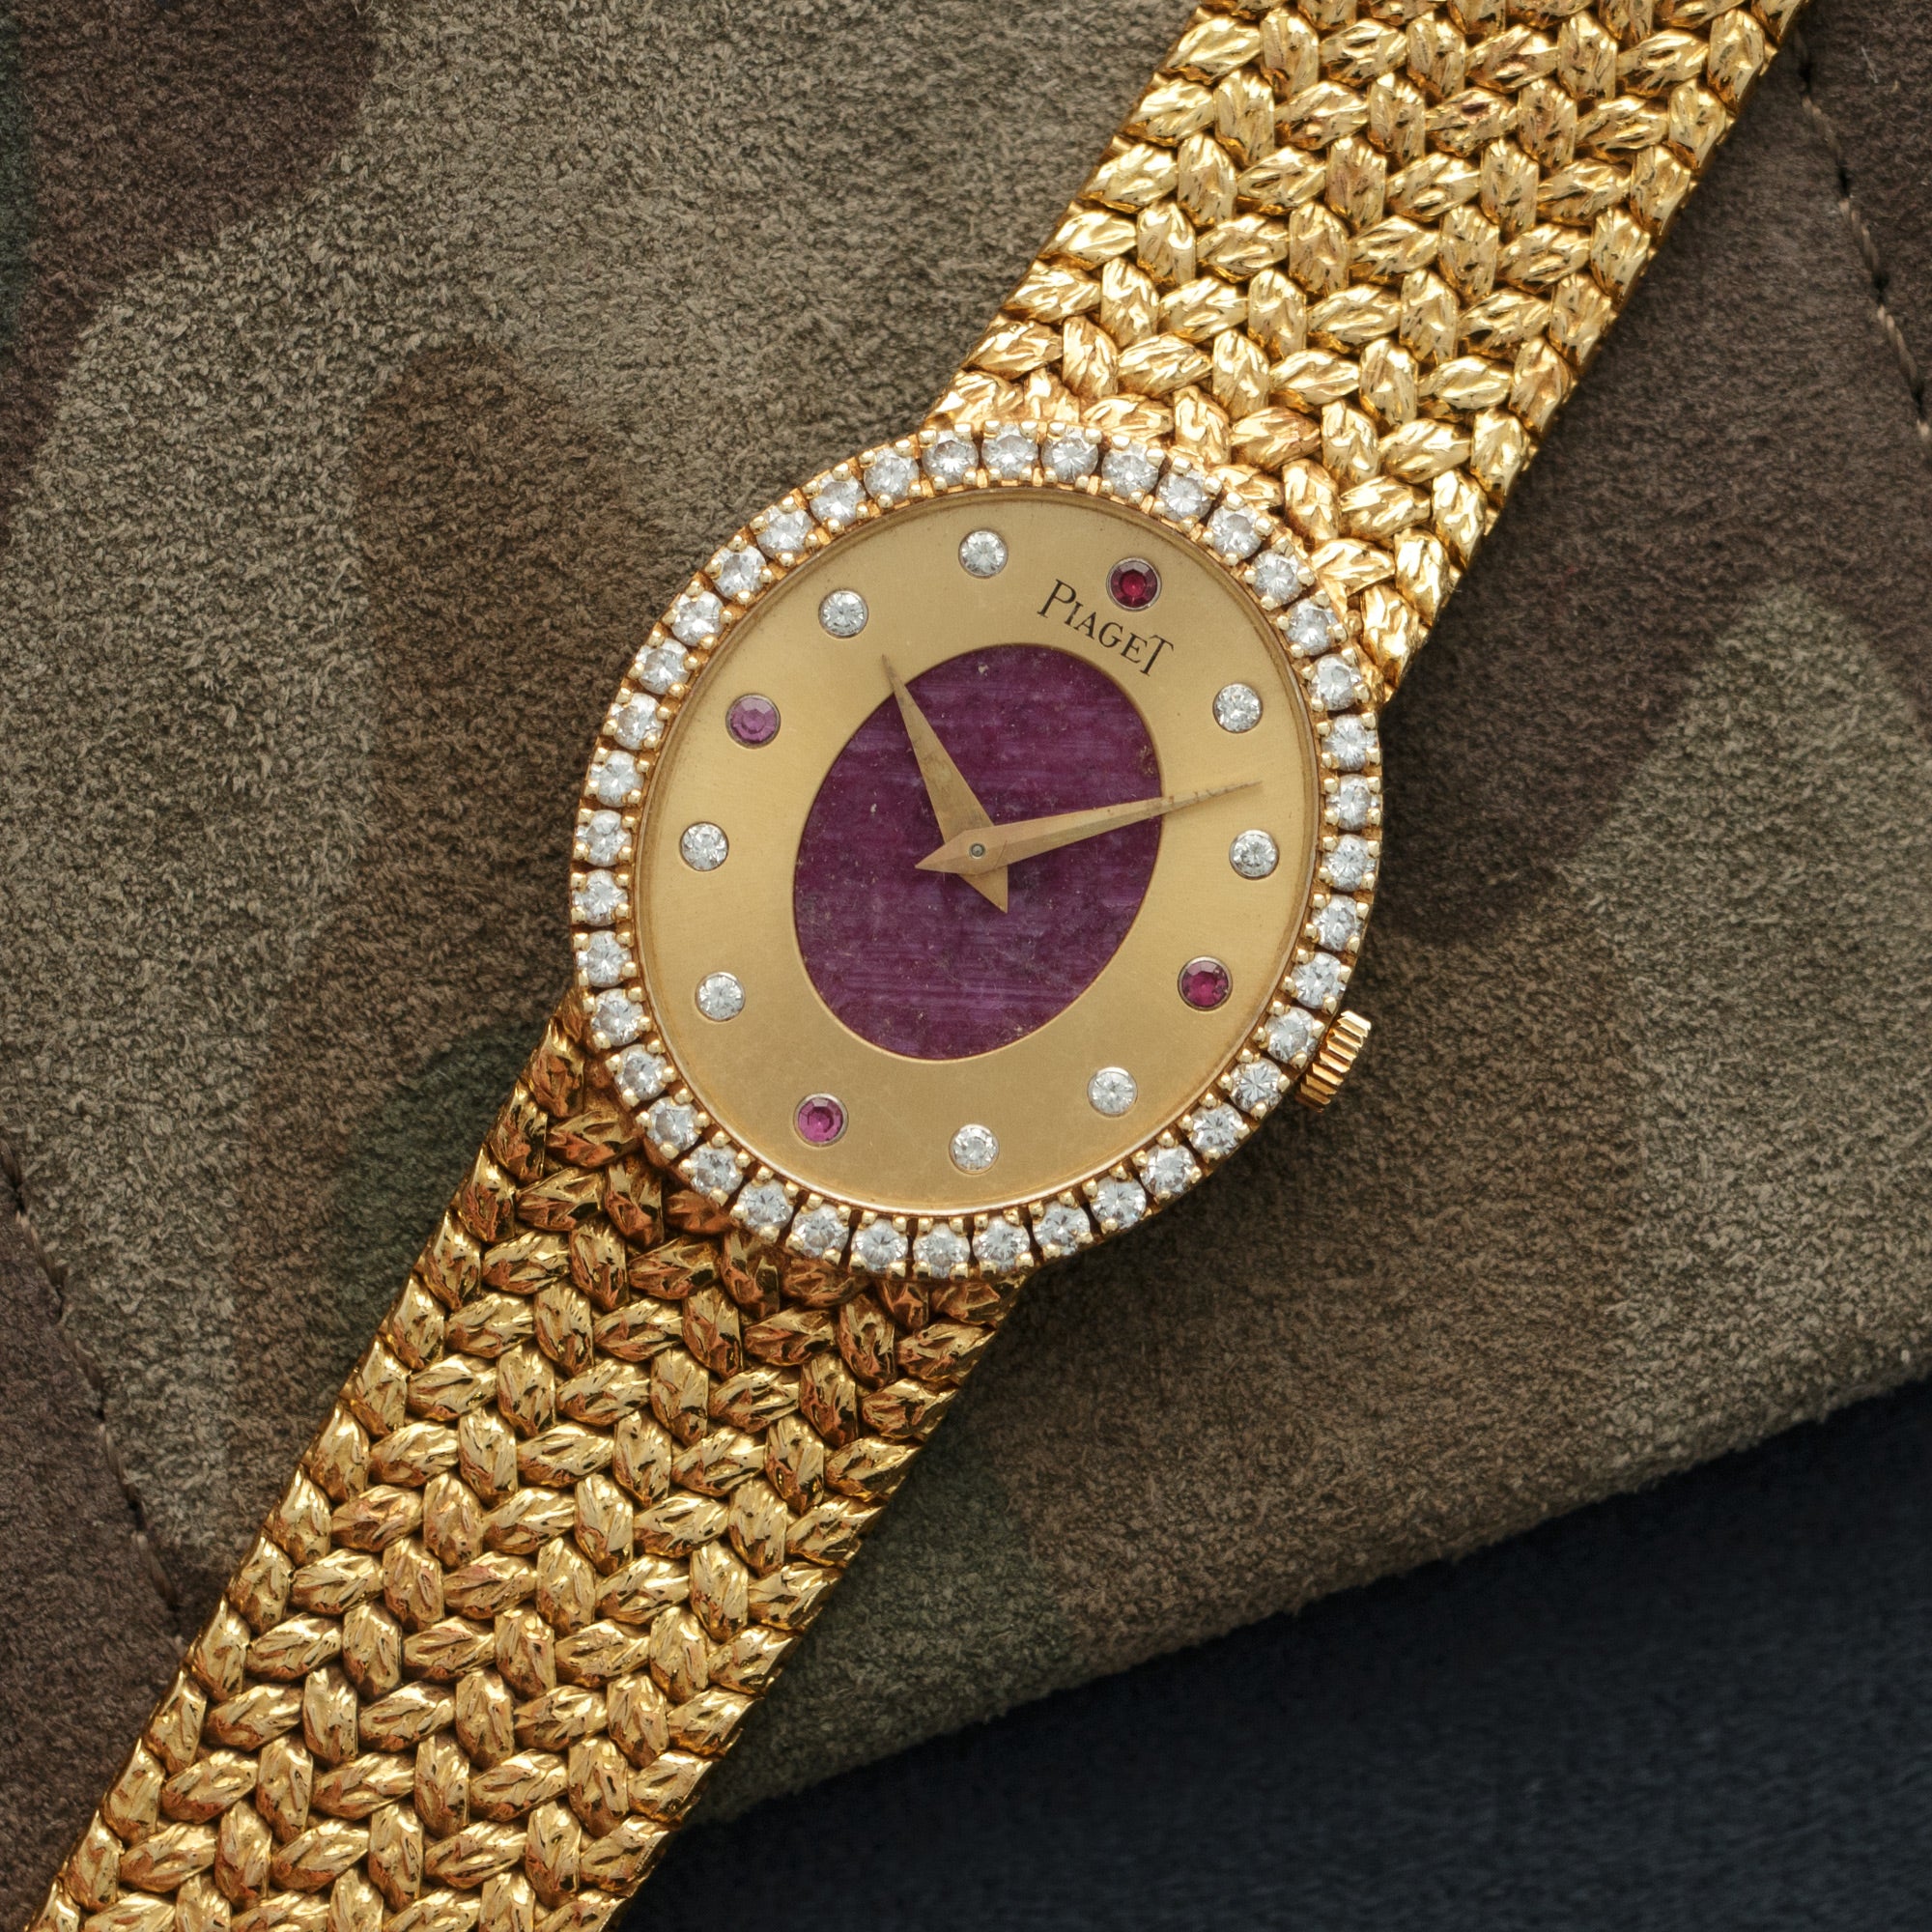 Piaget - Piaget Yellow Gold Ruby Diamond Watch, Circa 1970s - The Keystone Watches